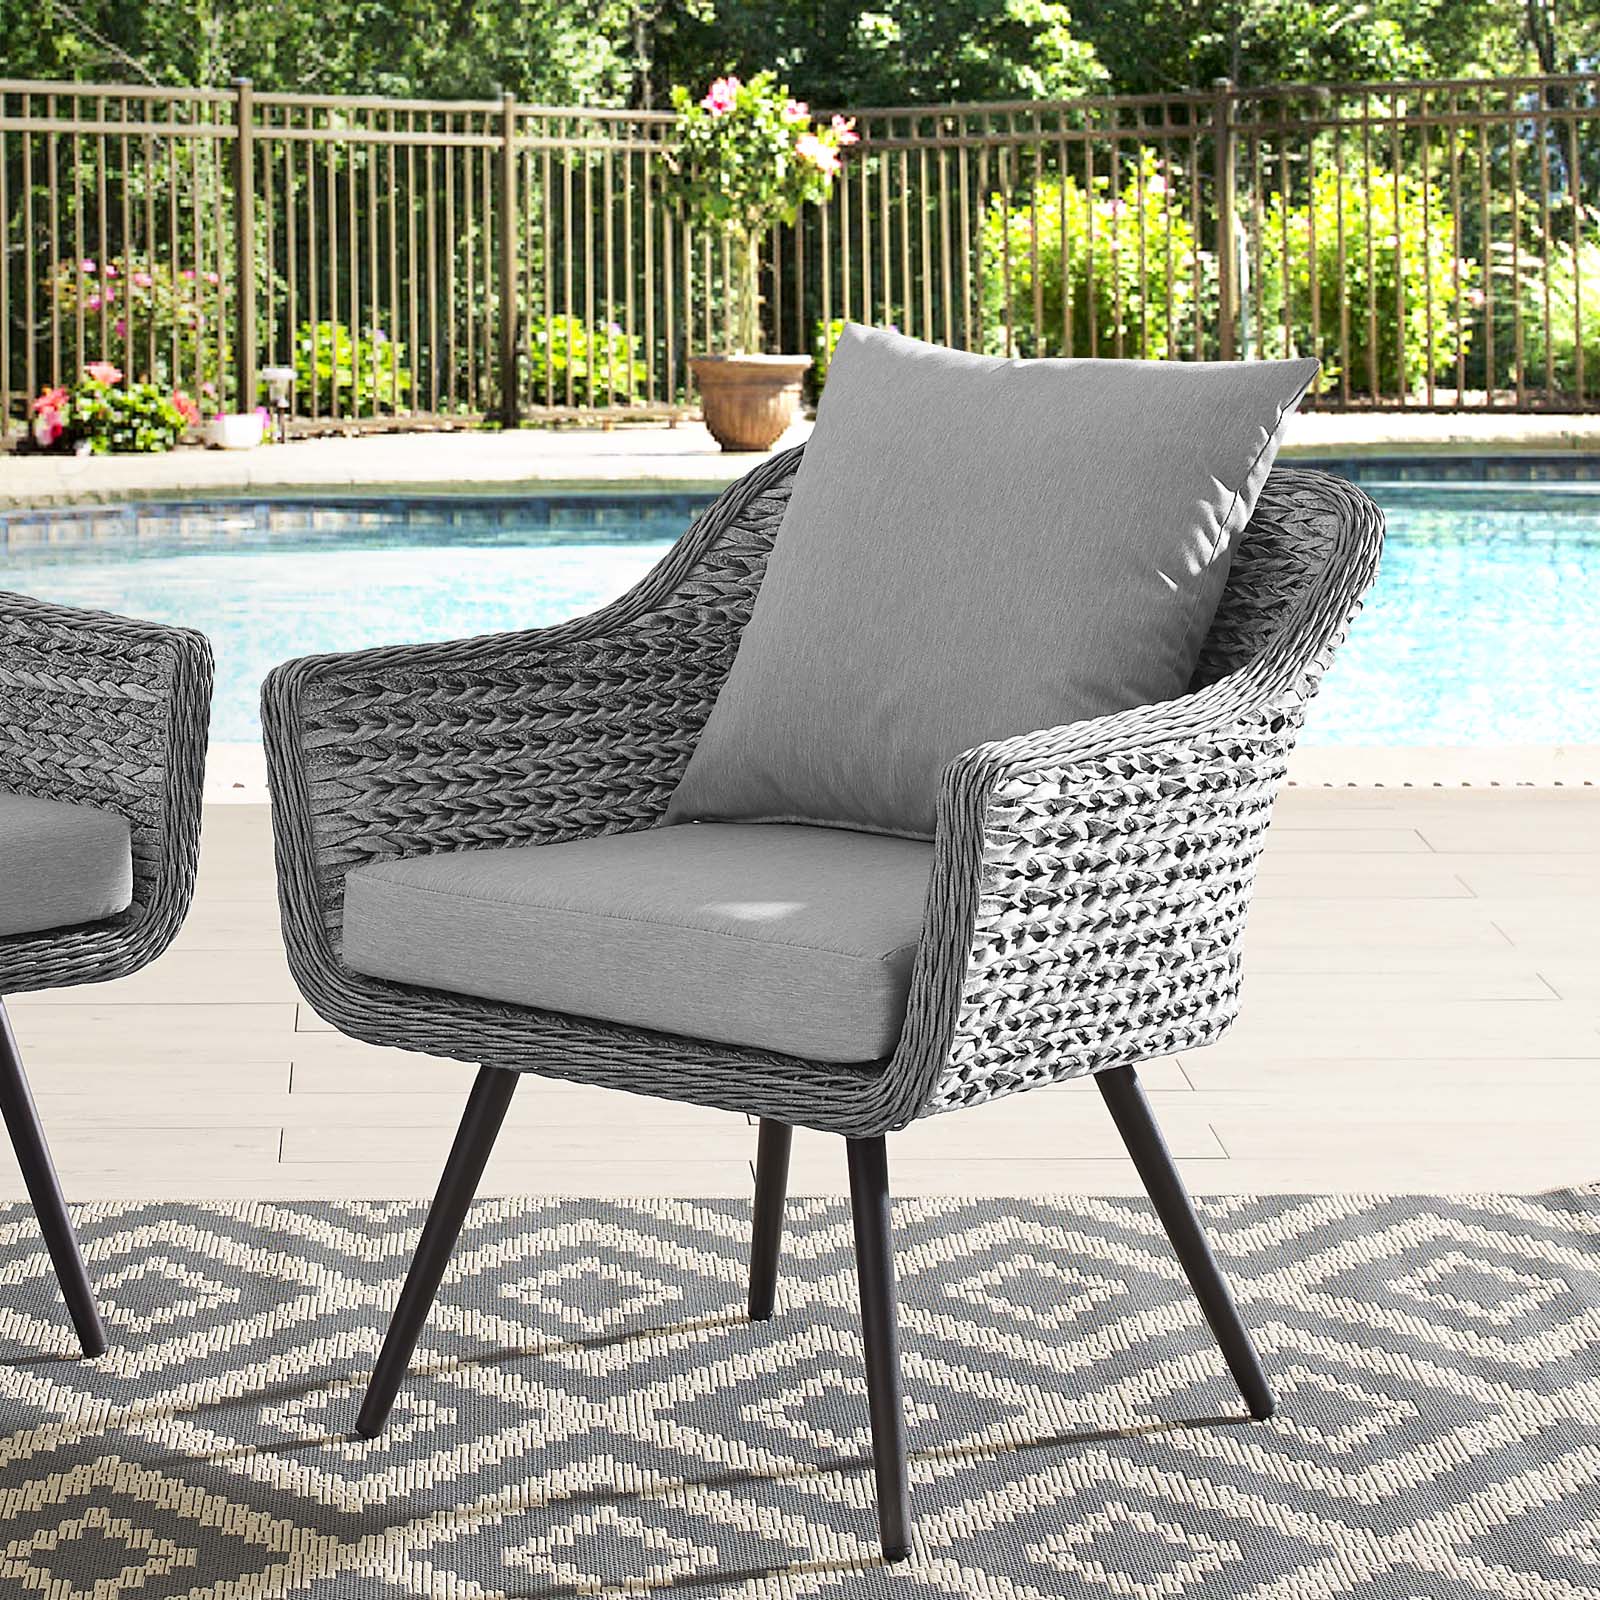 Modern Contemporary Urban Design Outdoor Patio Balcony Garden Furniture Lounge Chair Armchair, Rattan Wicker Aluminum Metal, Grey Gray - image 2 of 5